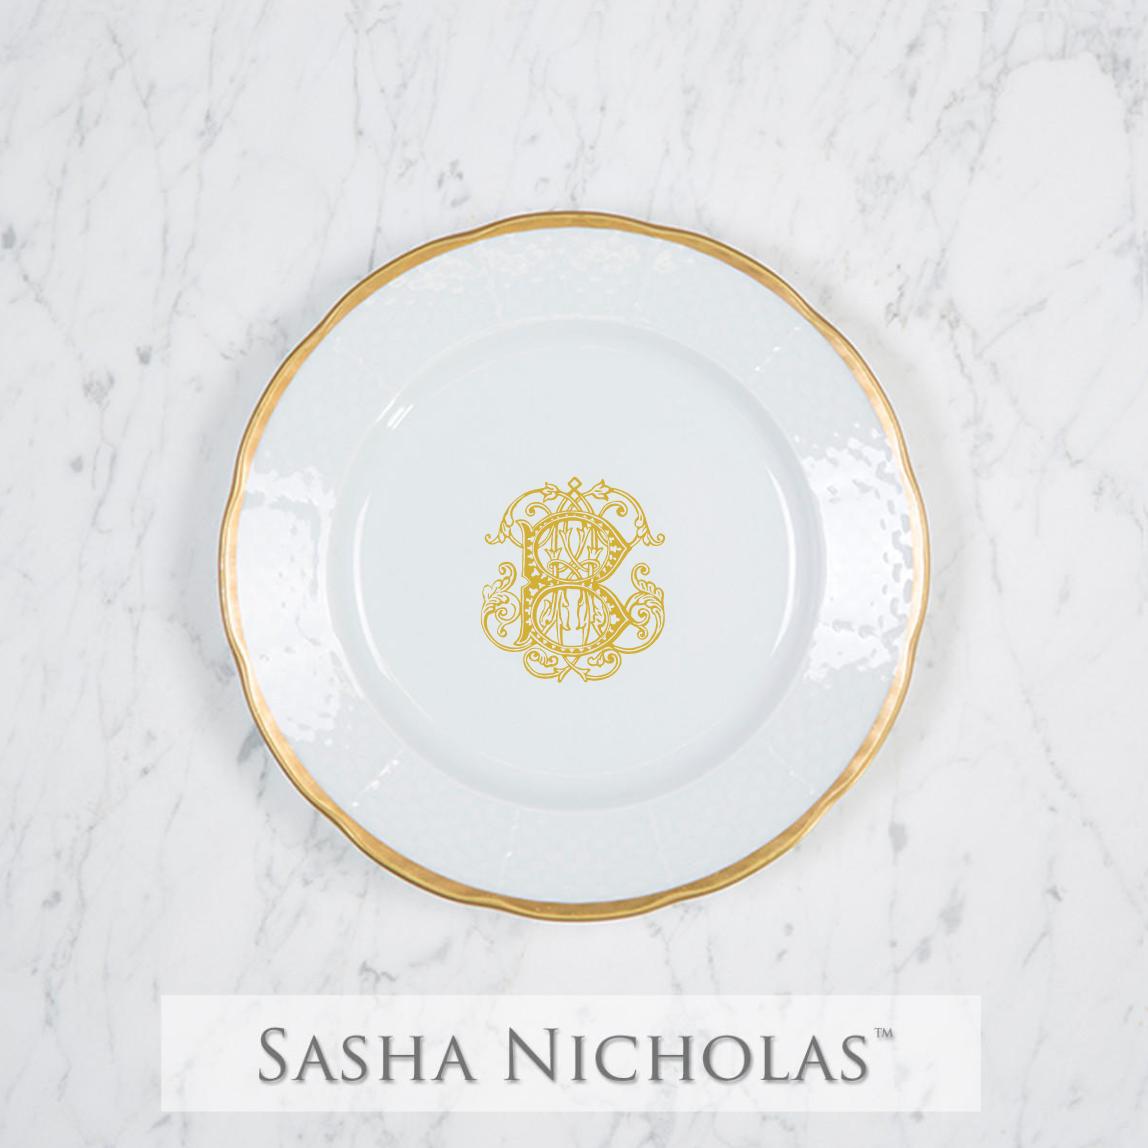 Salvatore-Bache Weave 24K Gold Salad Plate.